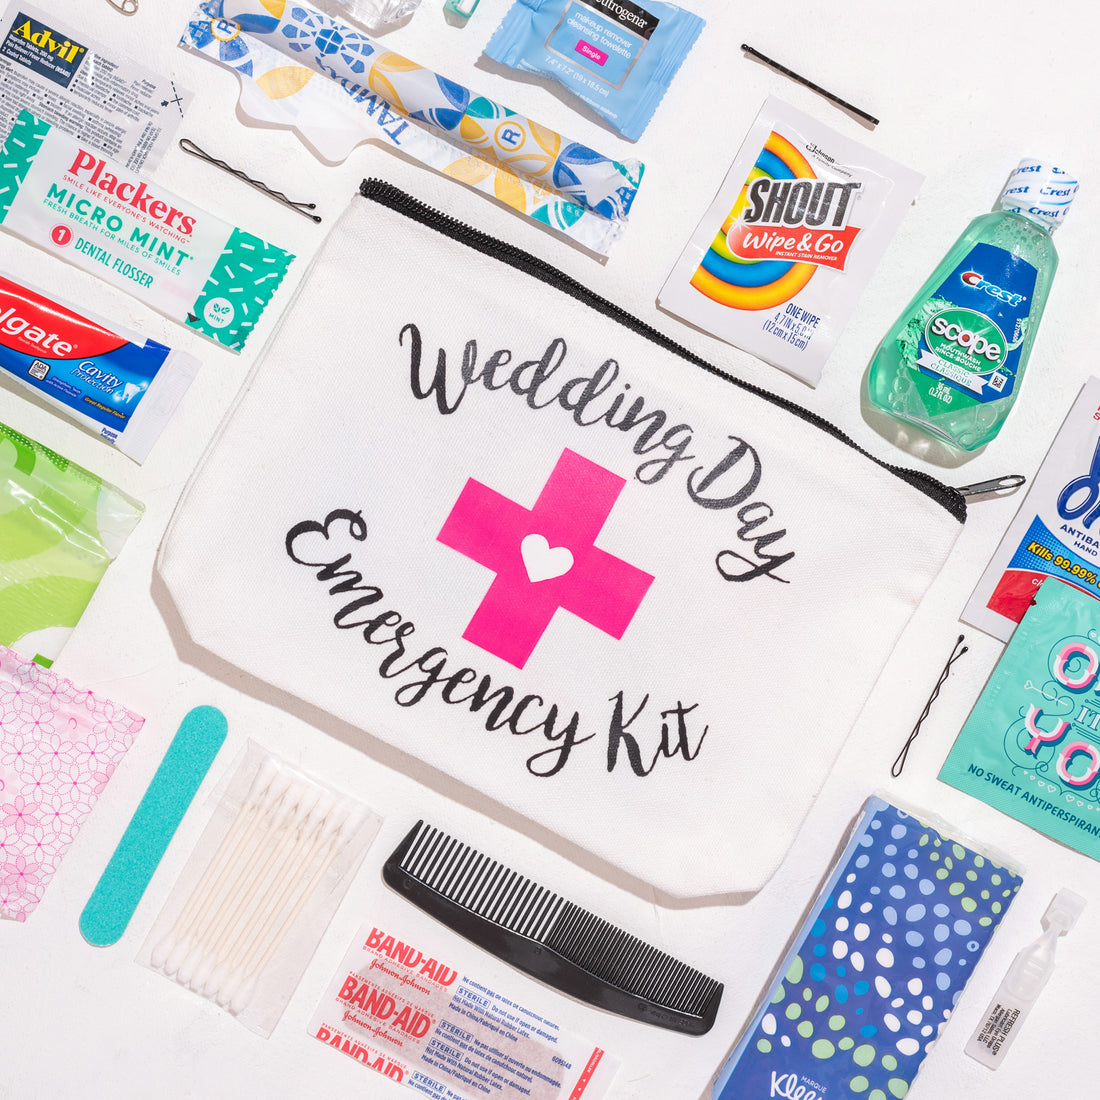 Bridal Emergency Kit  The I Do Wedding Studio